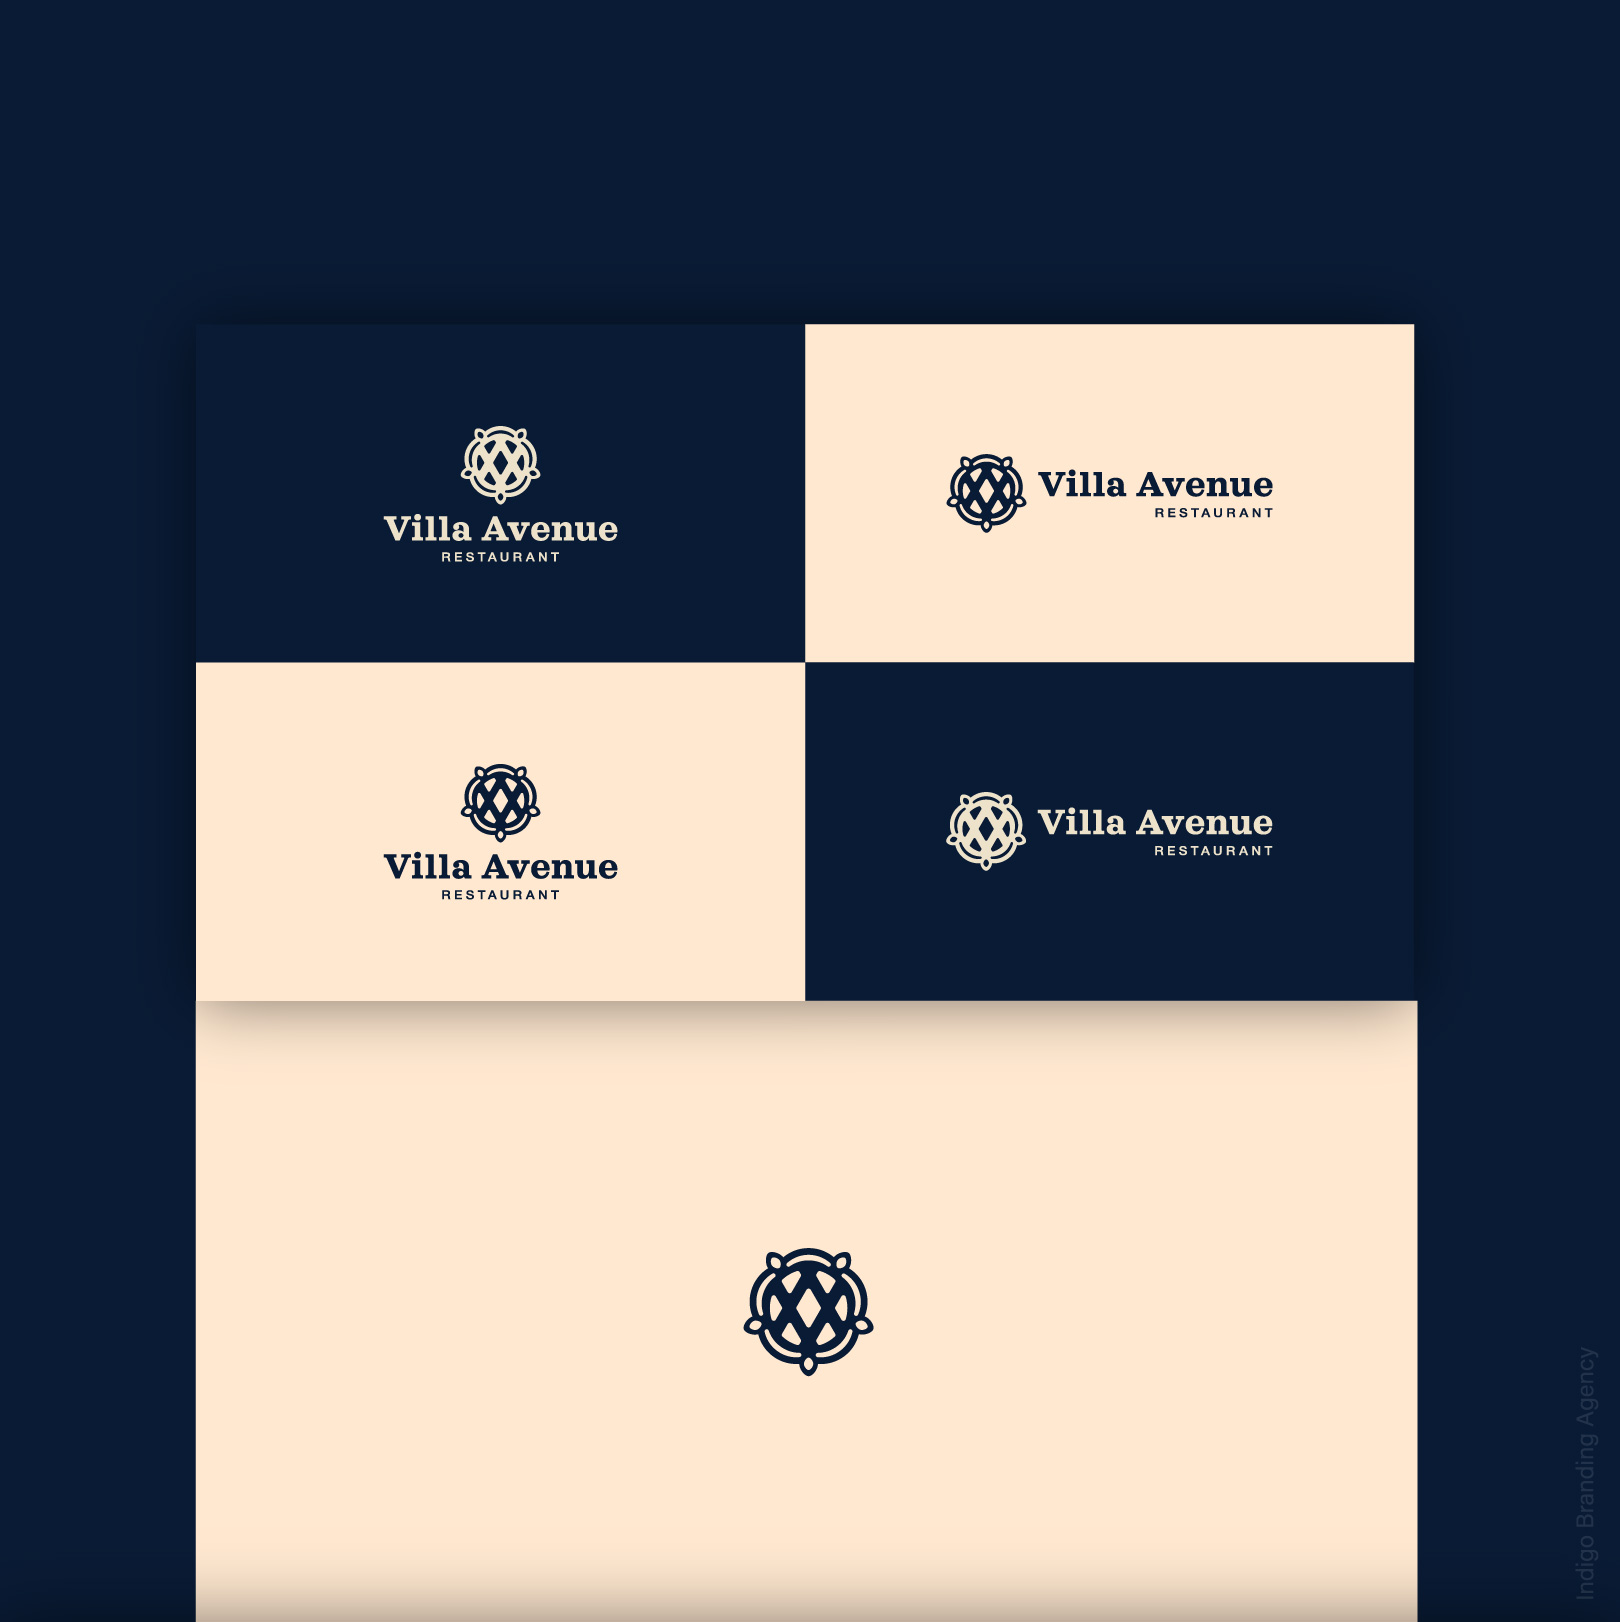 Villa Avenue branding and logo design by Indigo branding